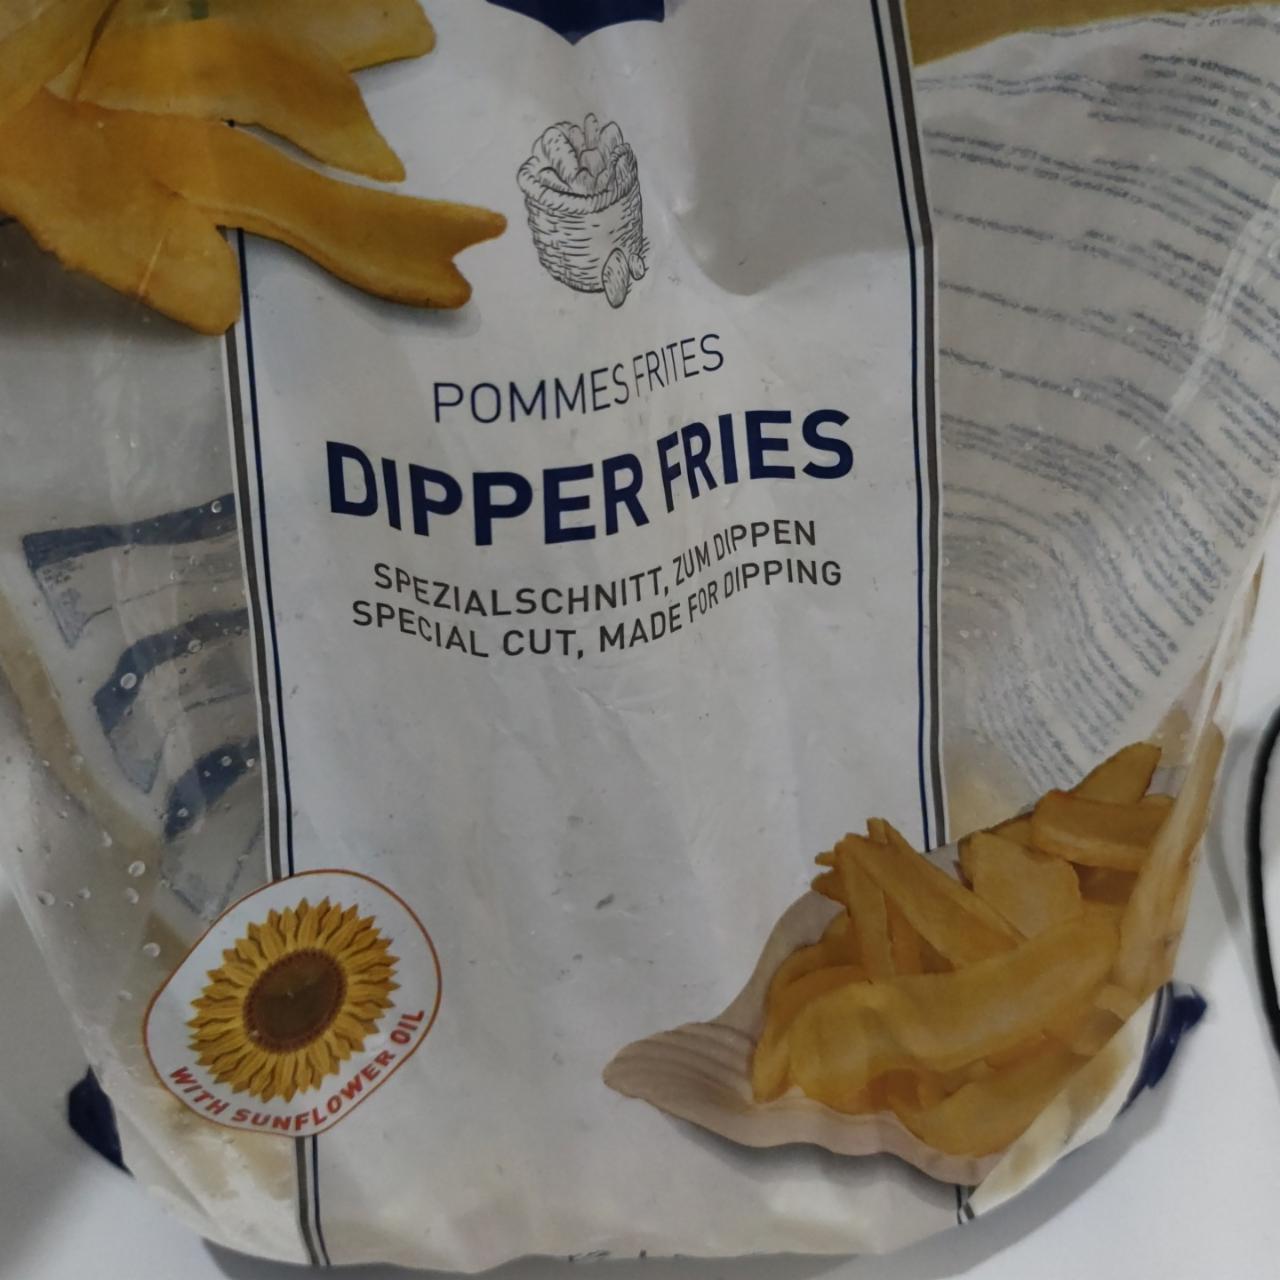 Képek - Dipper fries Metro chef